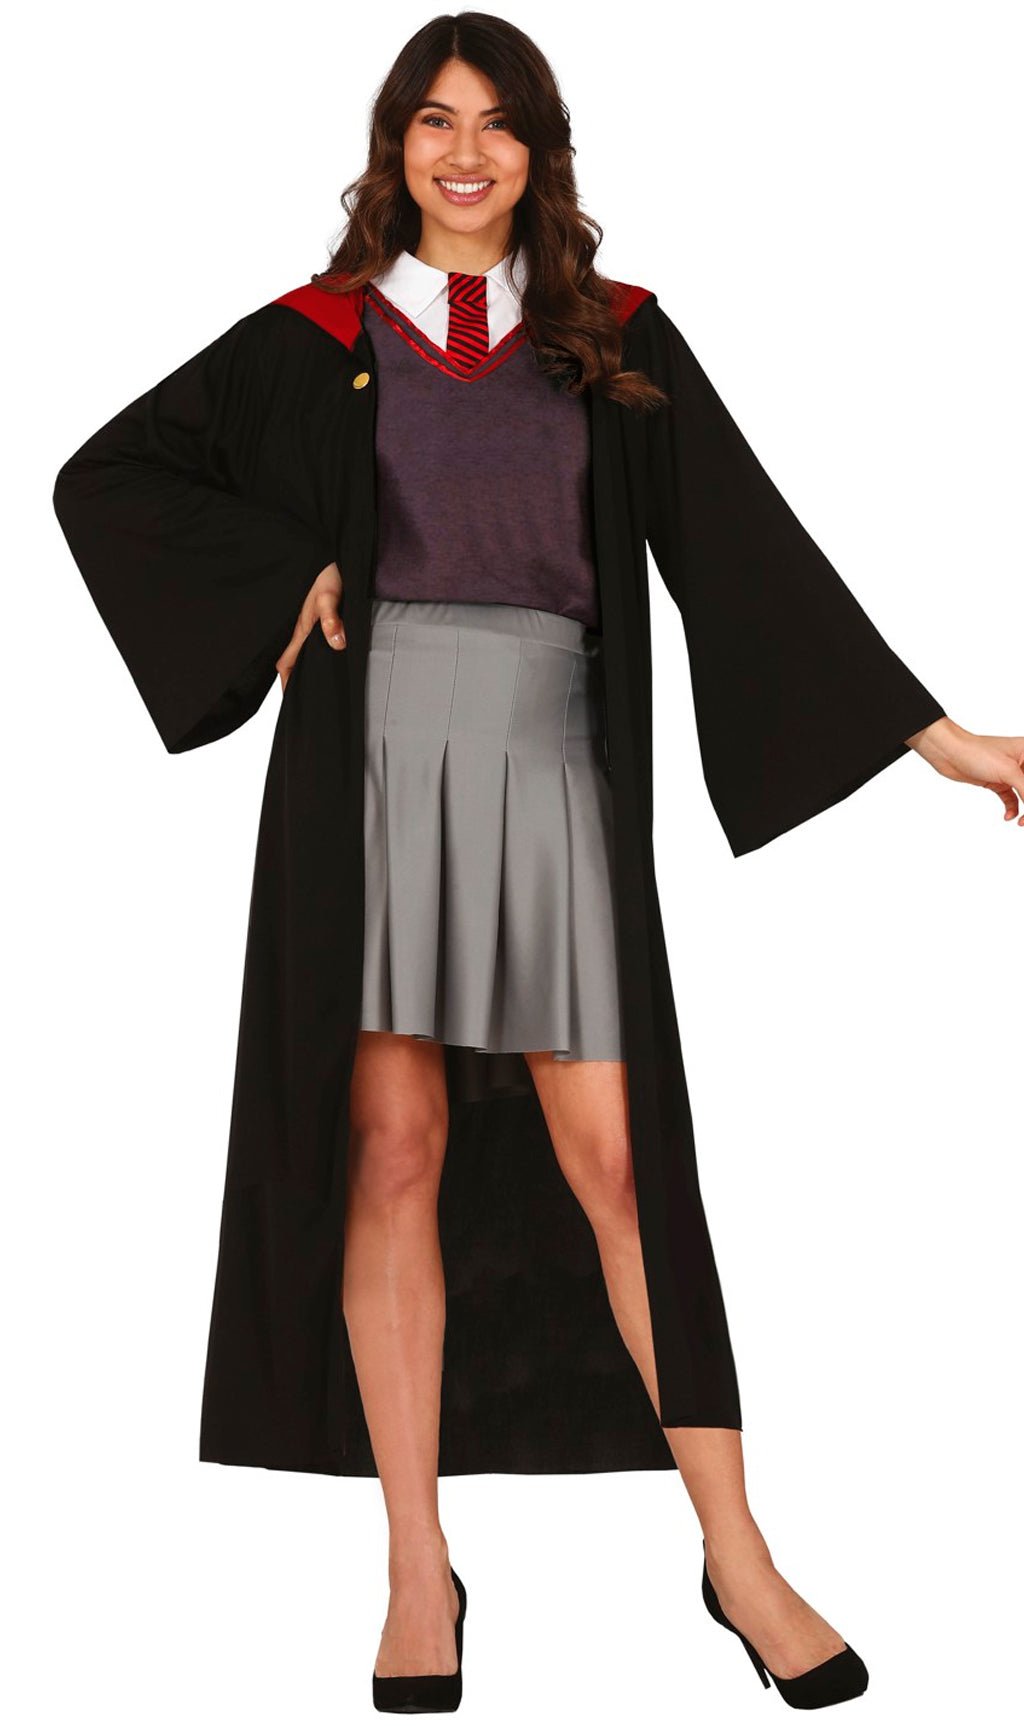 Costume Hermione Granger adulto